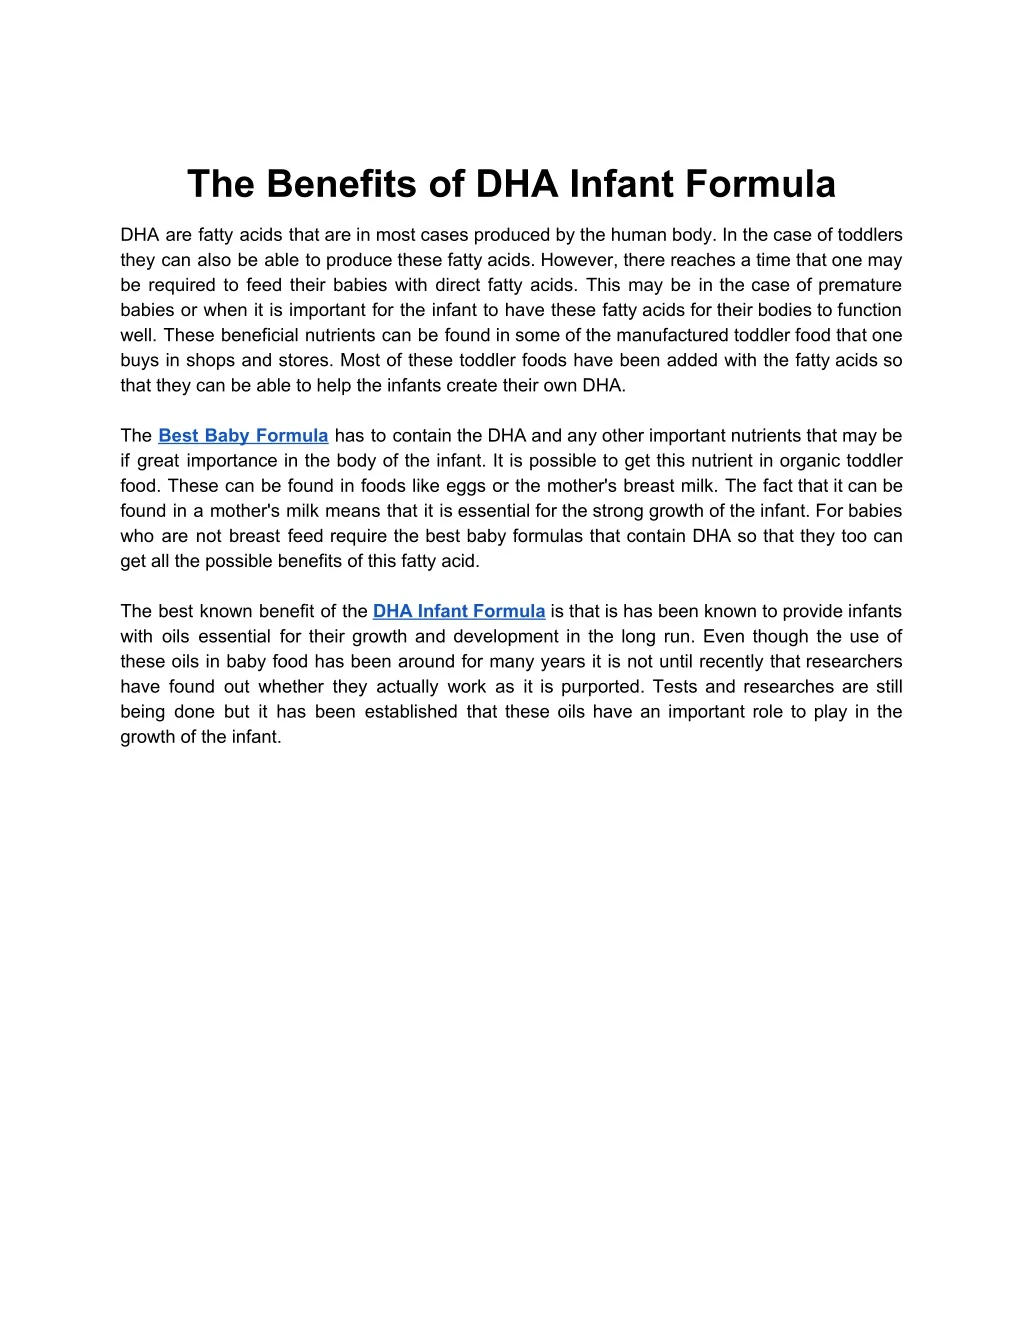 the benefits of dha infant formula